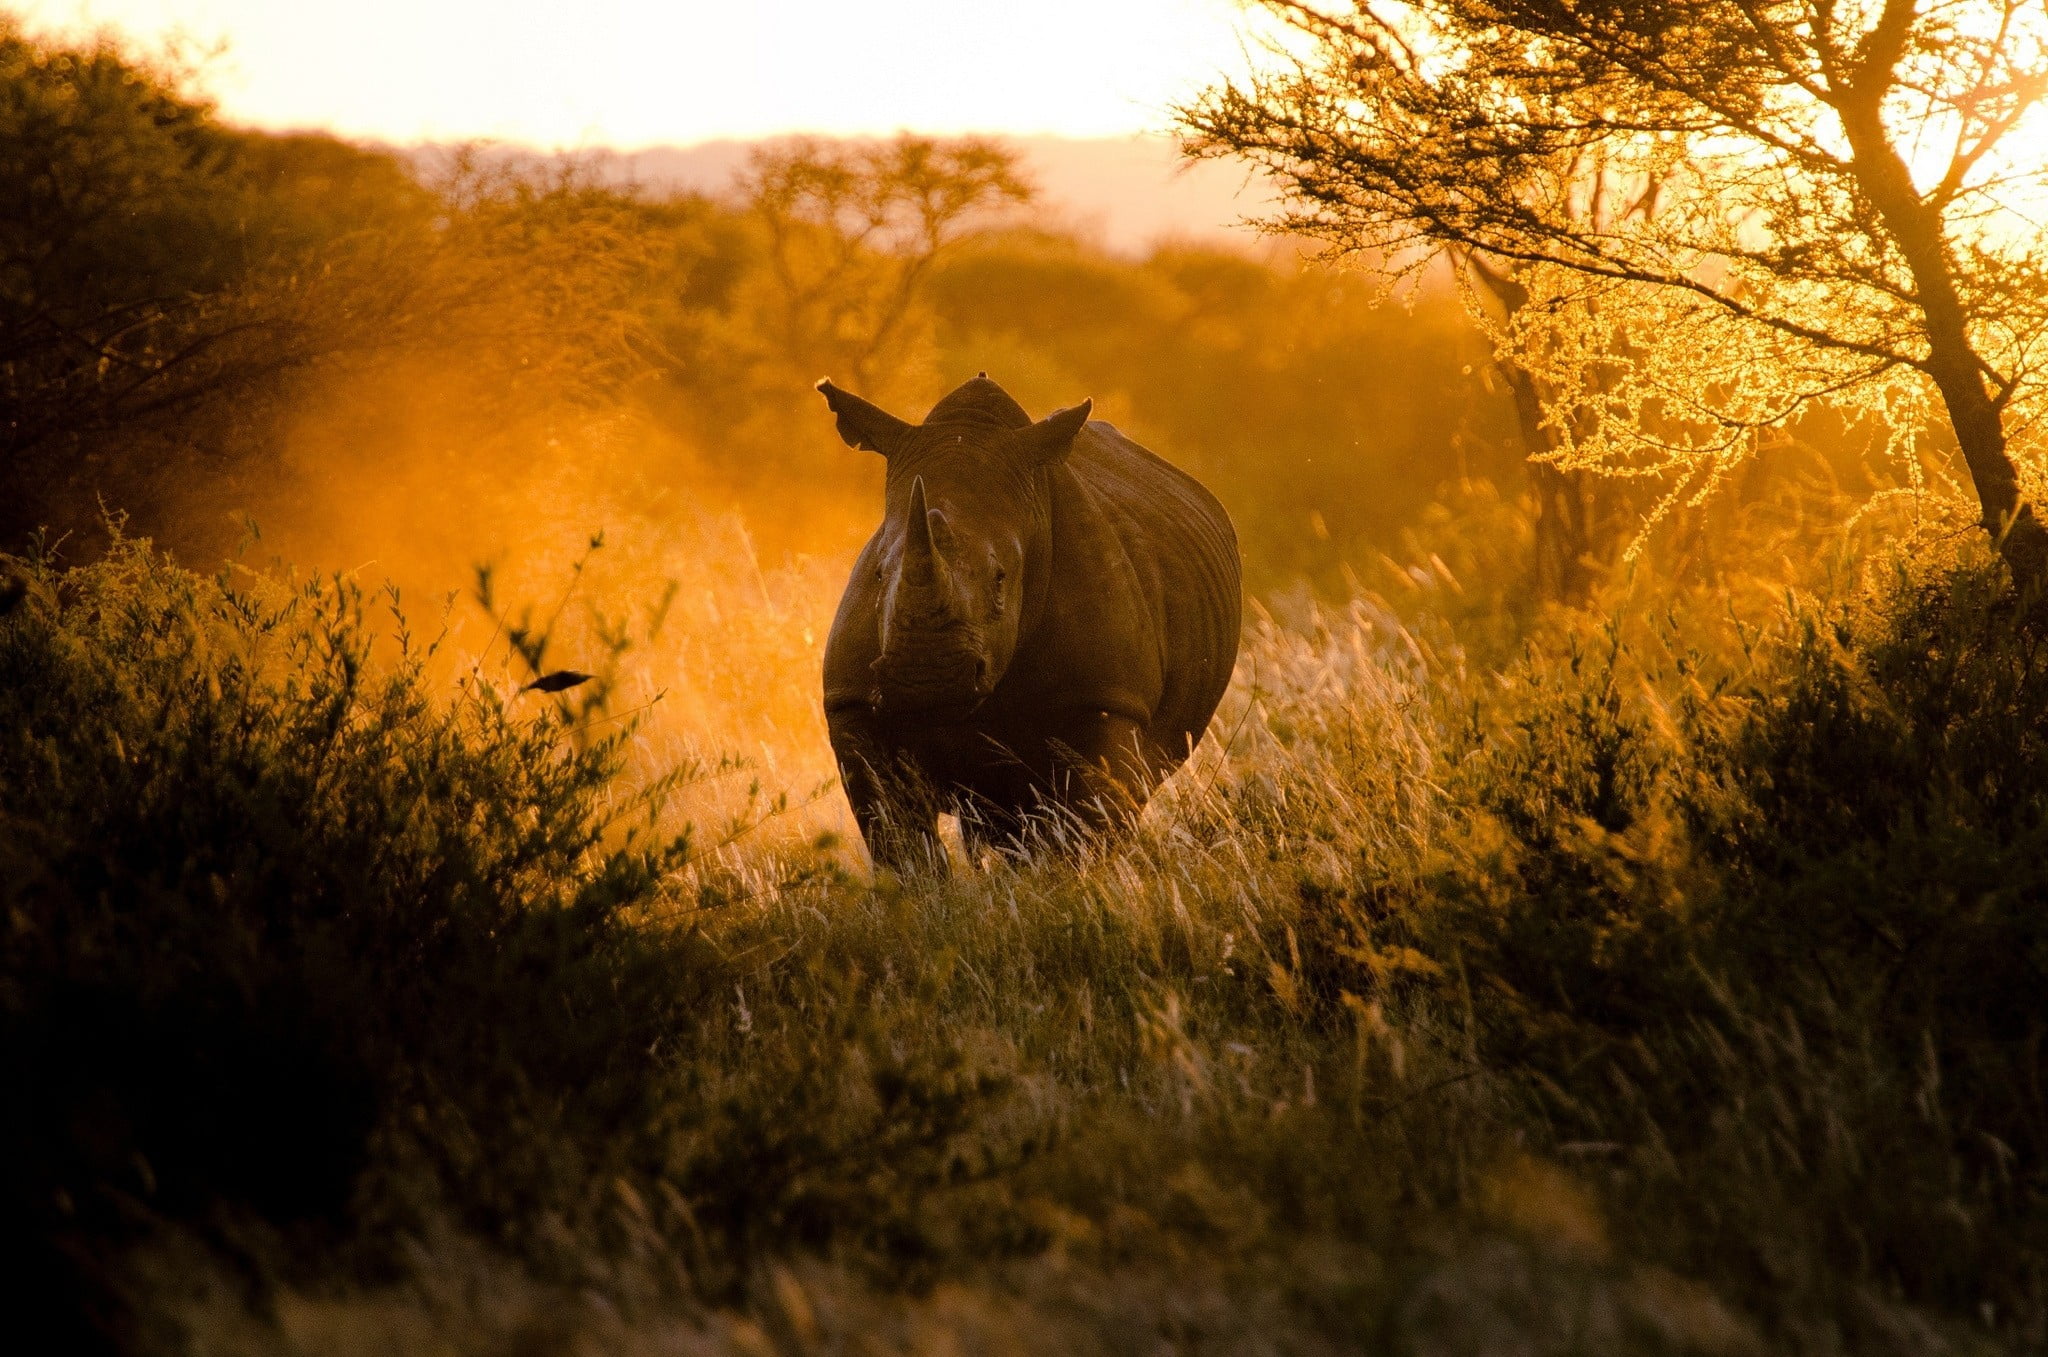 gray rhinoceros, morning, light, africa, nature, animal, animals In The Wild